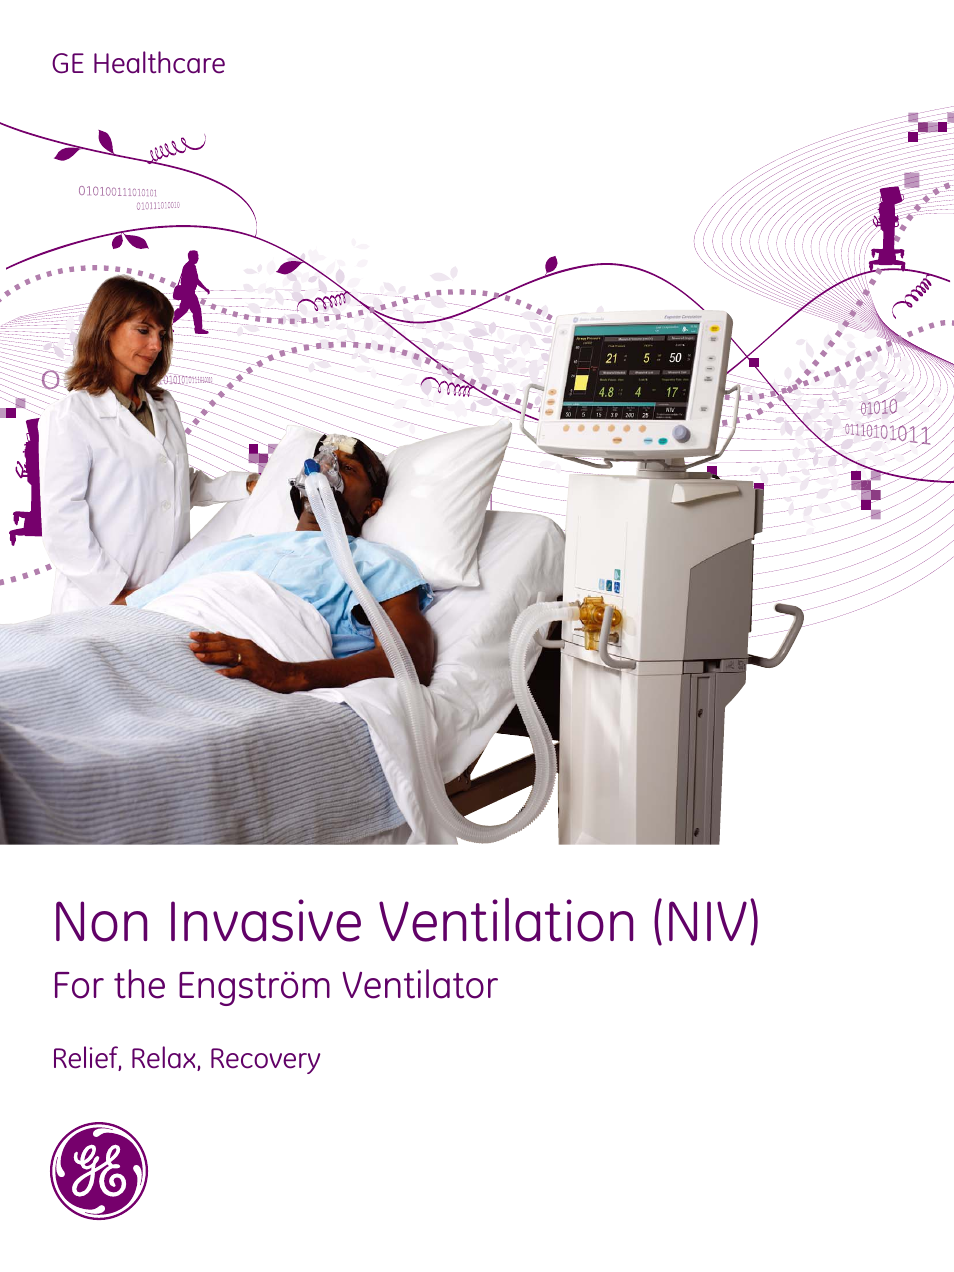 Non Invasive Ventilation (NIV) For the Engström Ventilator